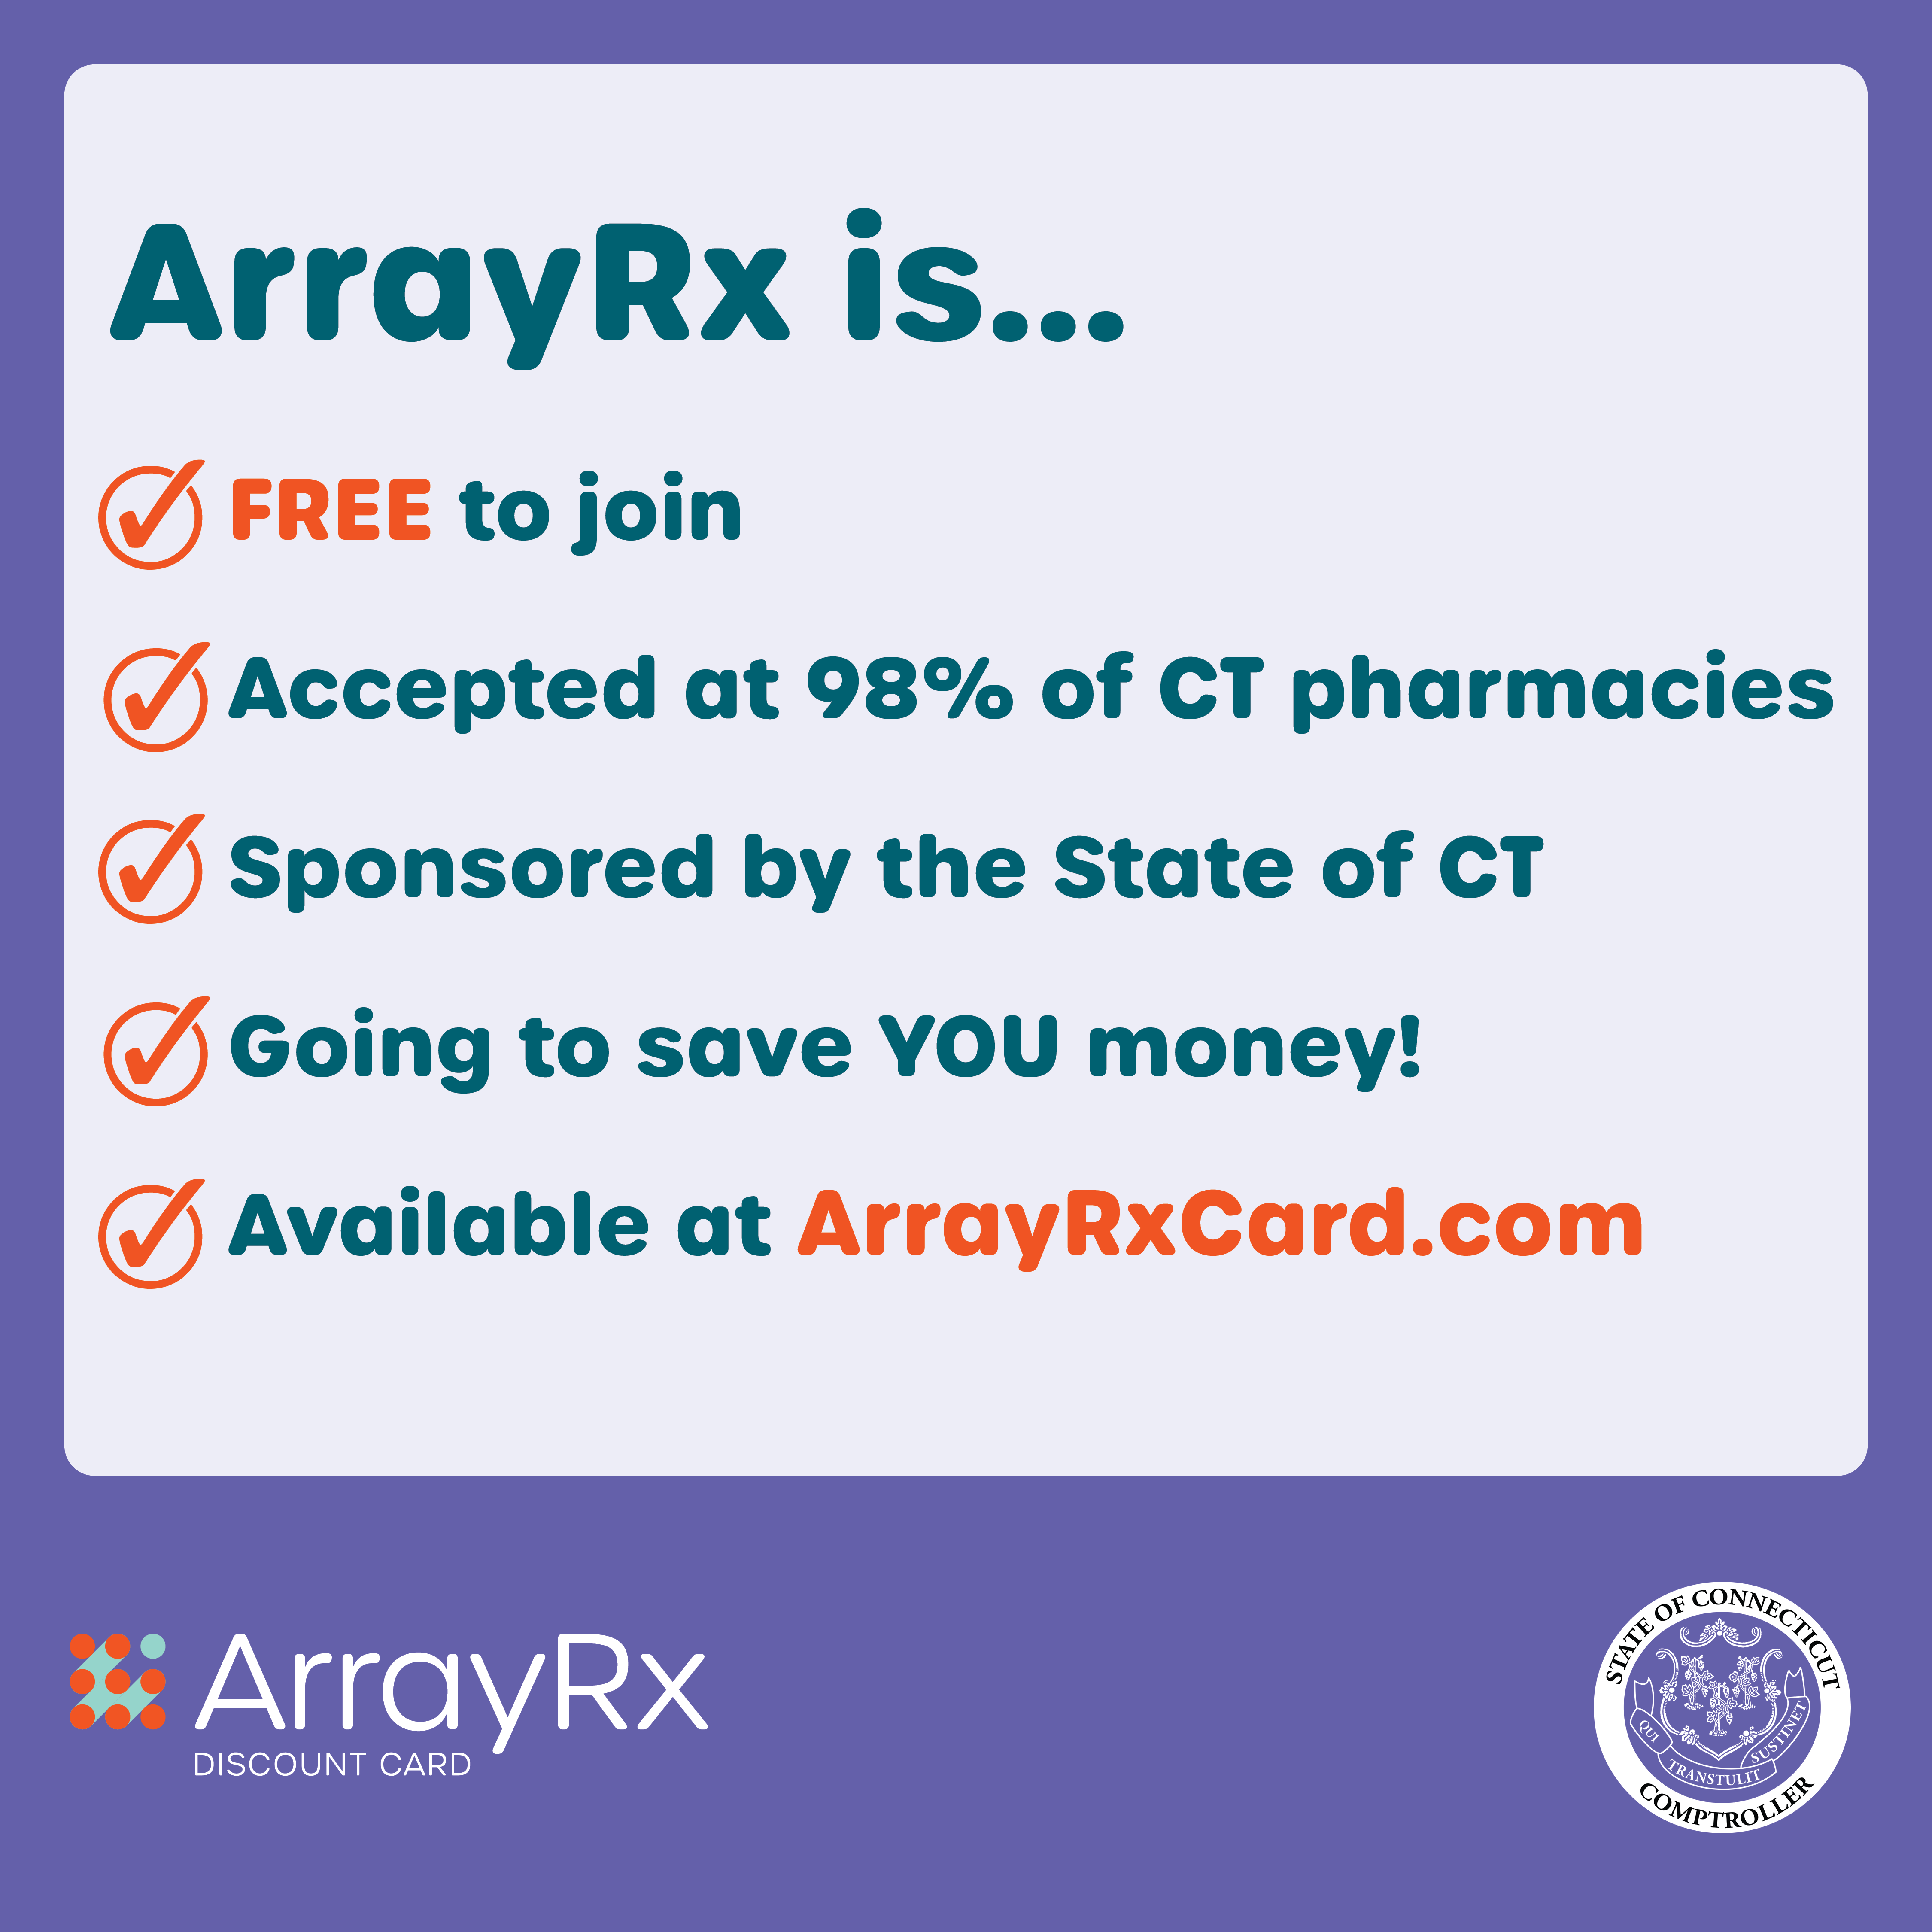 ArrayRx